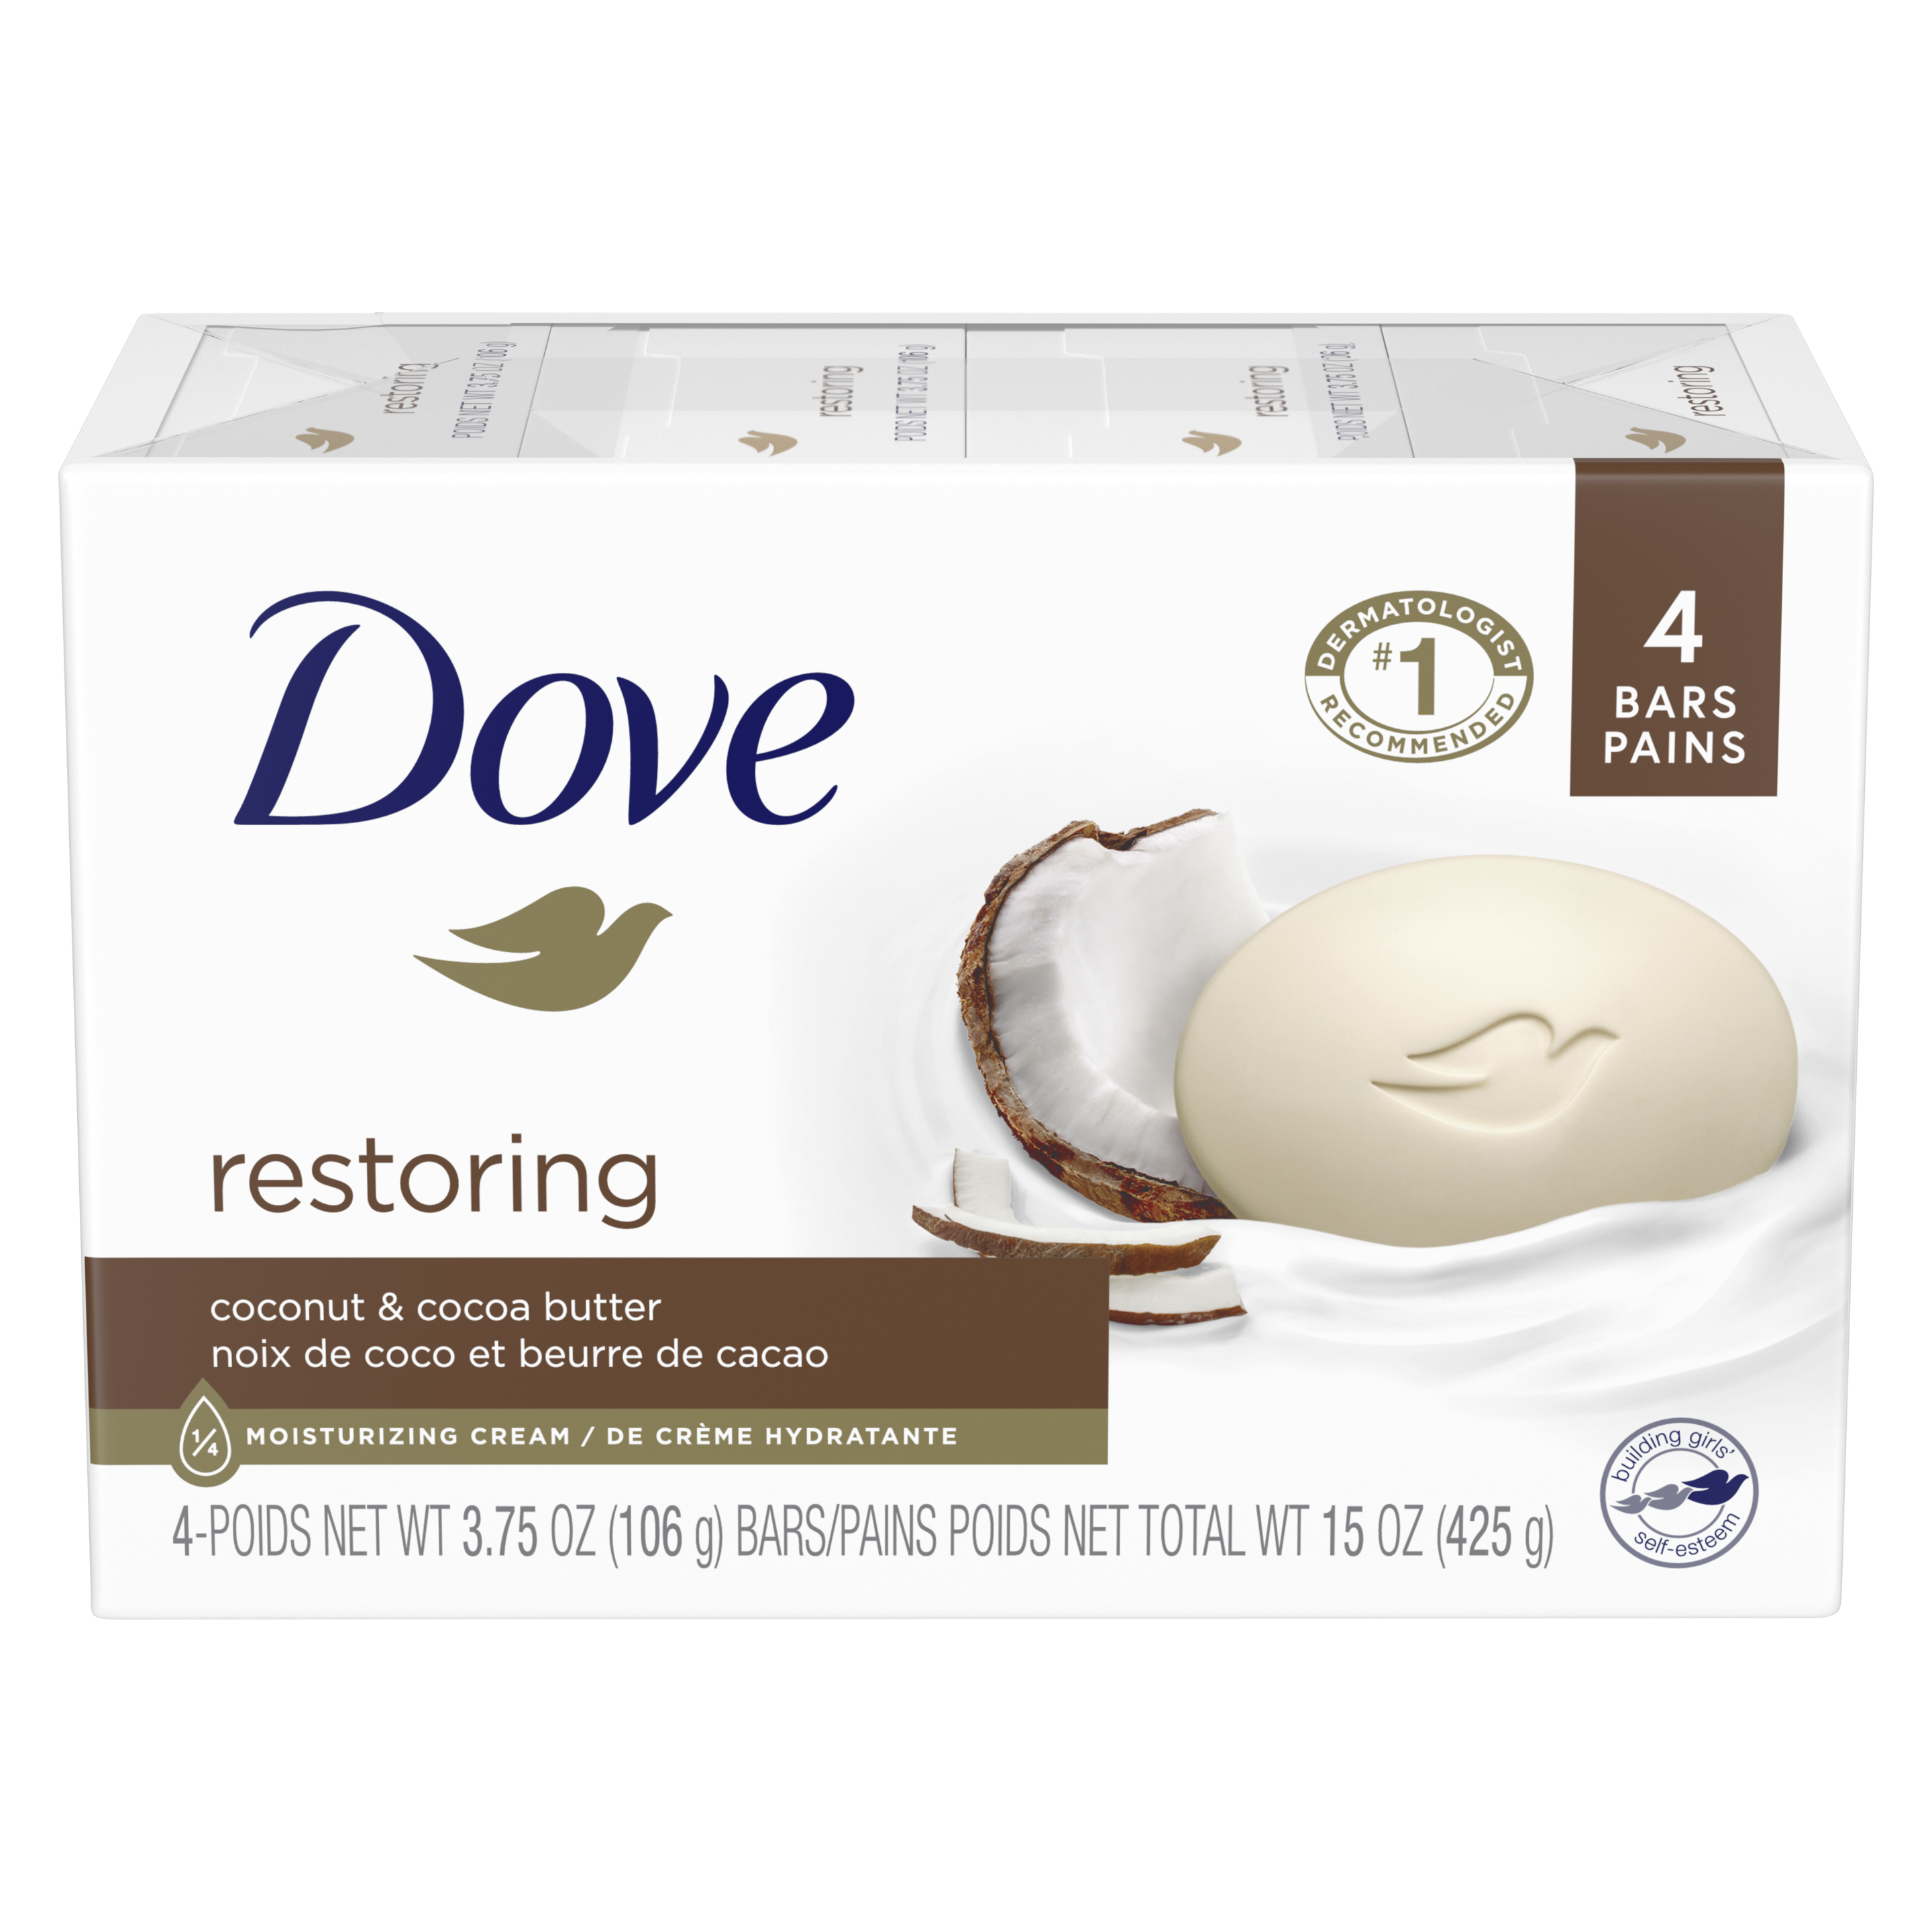 Dove Restoring Beauty Bar 4 bar 3.75oz